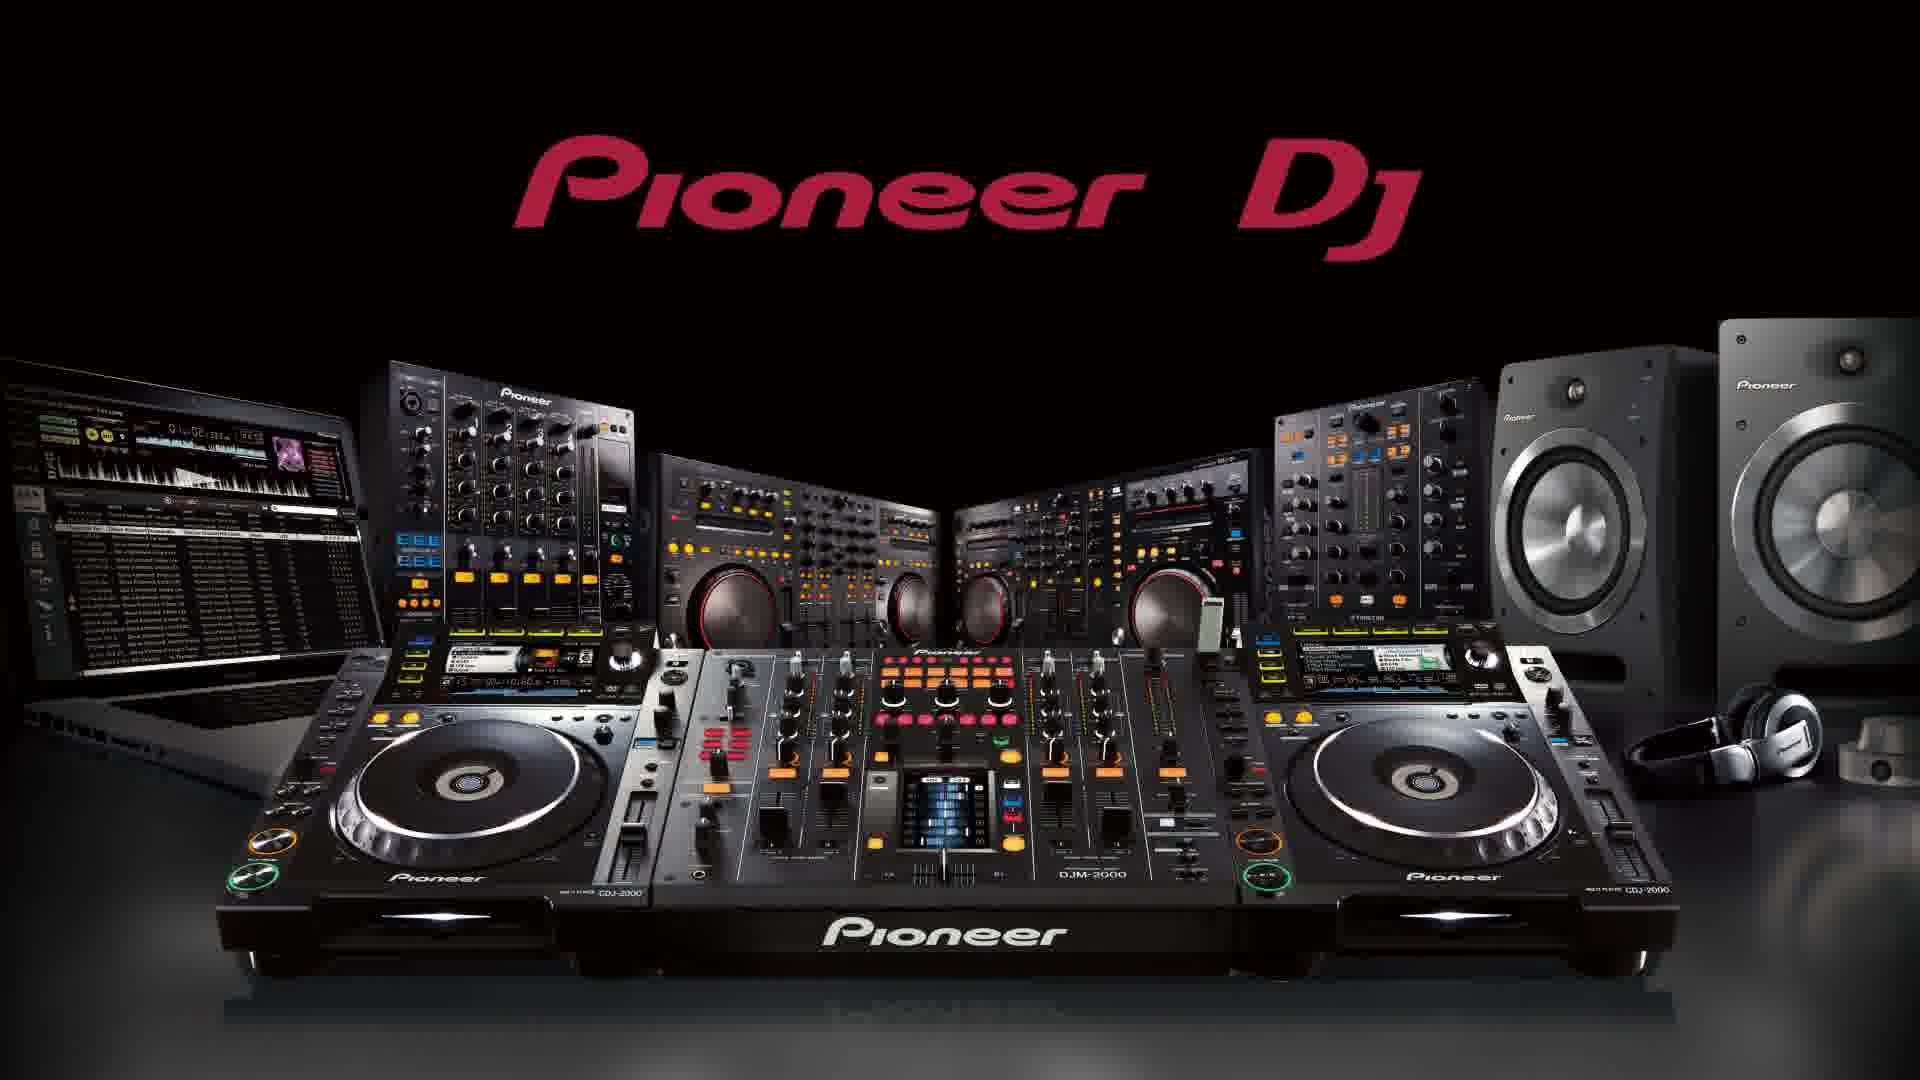 DJ Background Free Download. Wallpaper, Background, Image